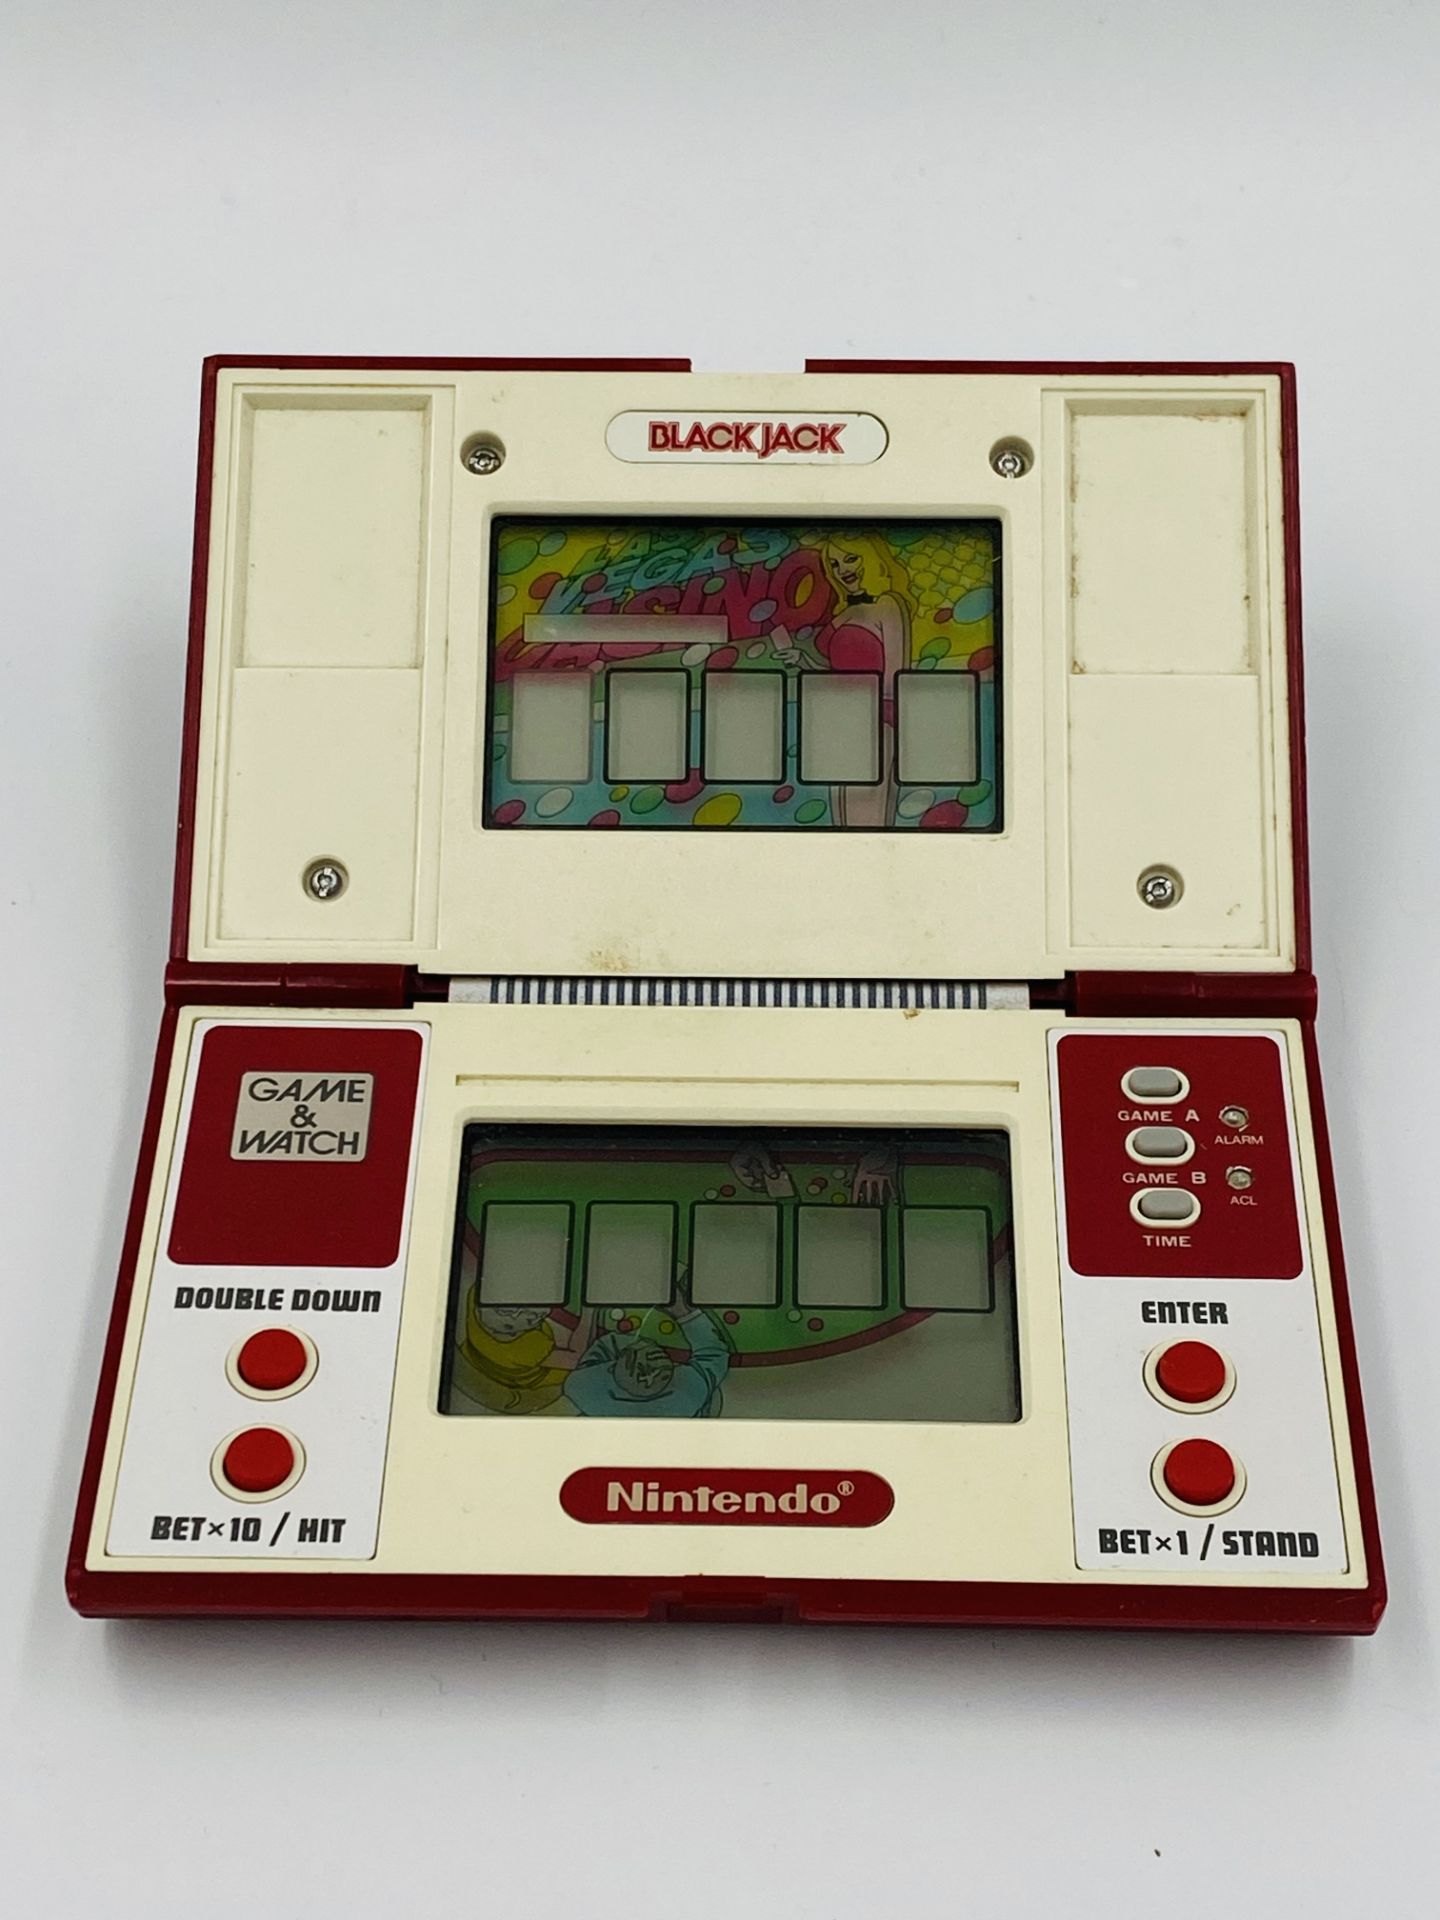 Nintendo Game & Watch Blackjack, model BJ-60 - Image 4 of 4